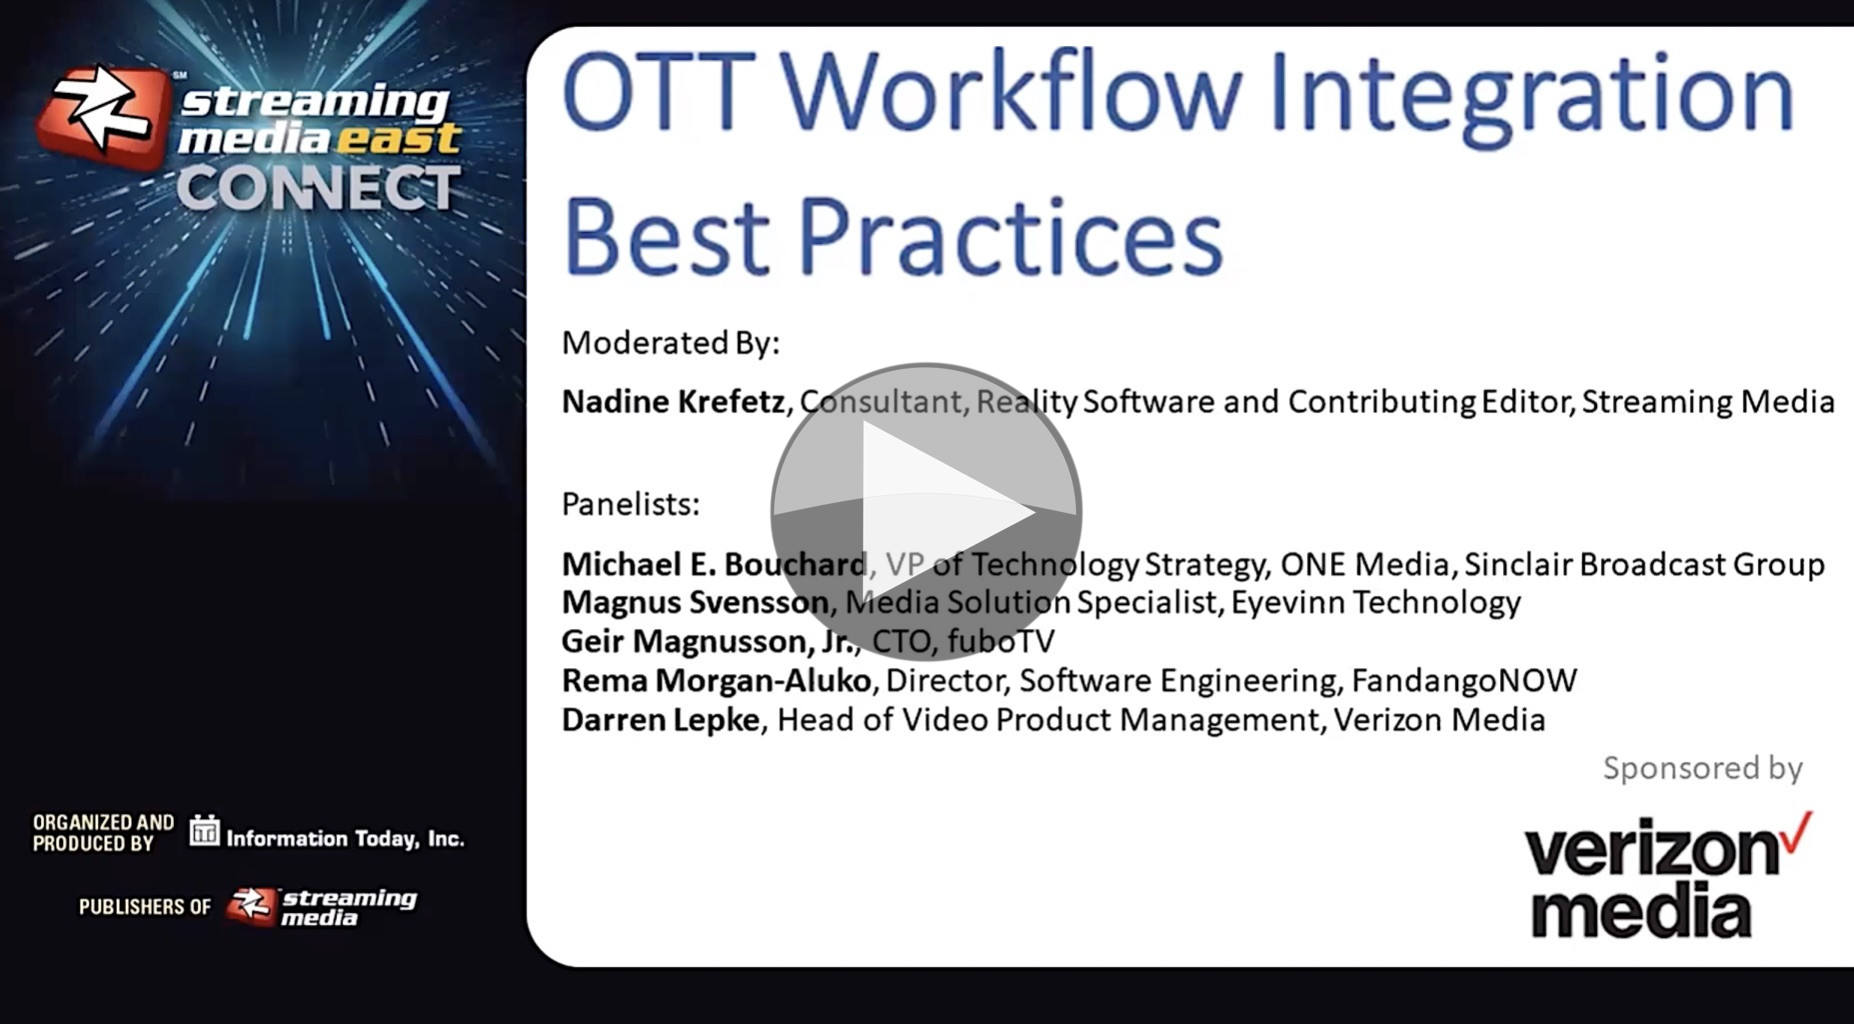 Video OTT Workflow Integration Best Practices